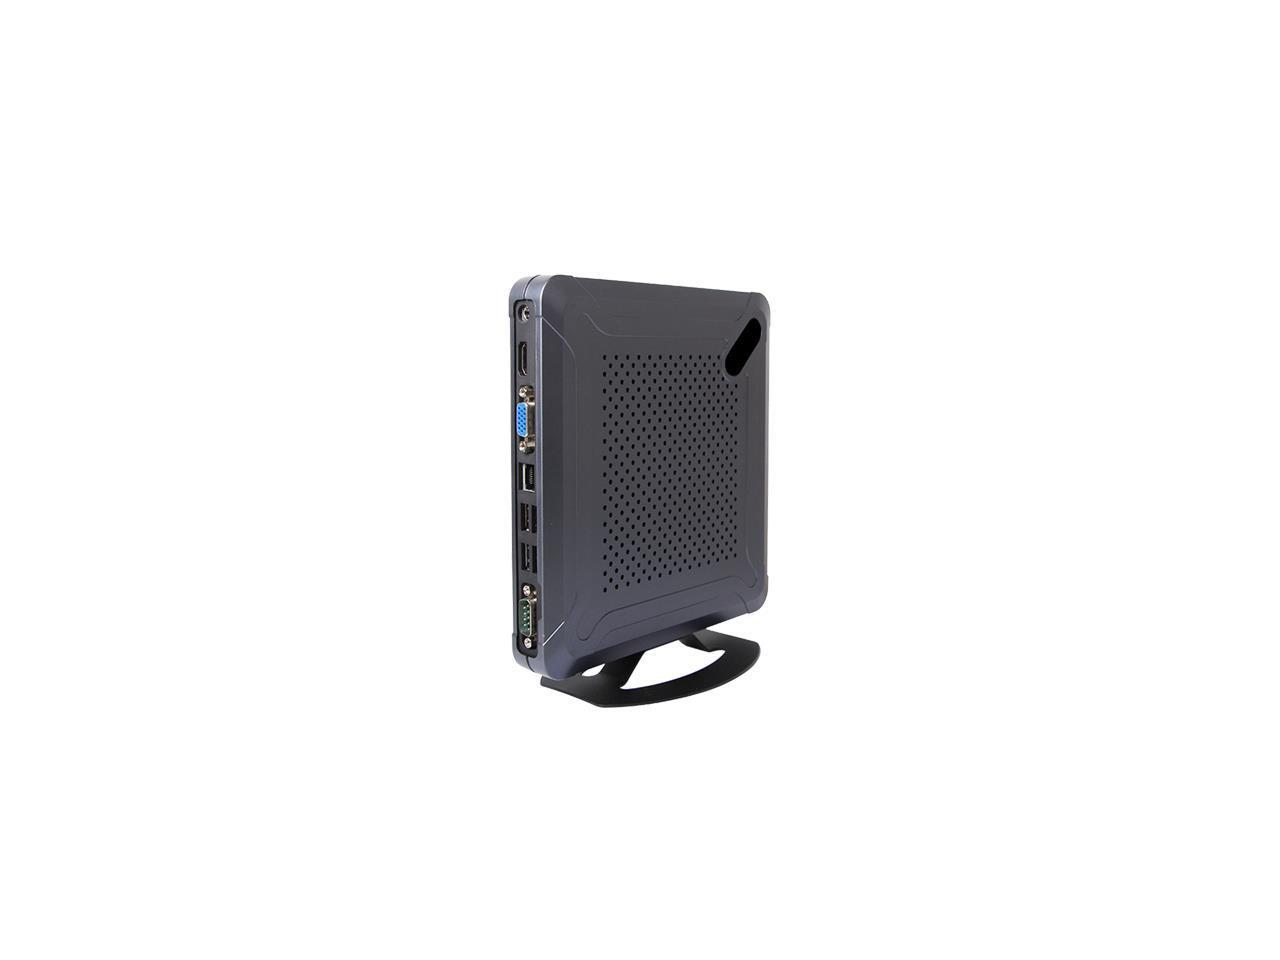 Mini PC,Desktop Computer,with Windows 10 Pro/Linux Ubuntu support,Intel Core I5 2520M,(Black),[HUNSN BH06],[COM/VGA/HDMI/LAN/ 8*USB2.0/ With Cooling fan],(4G RAM/128G SSD/1TB HDD)